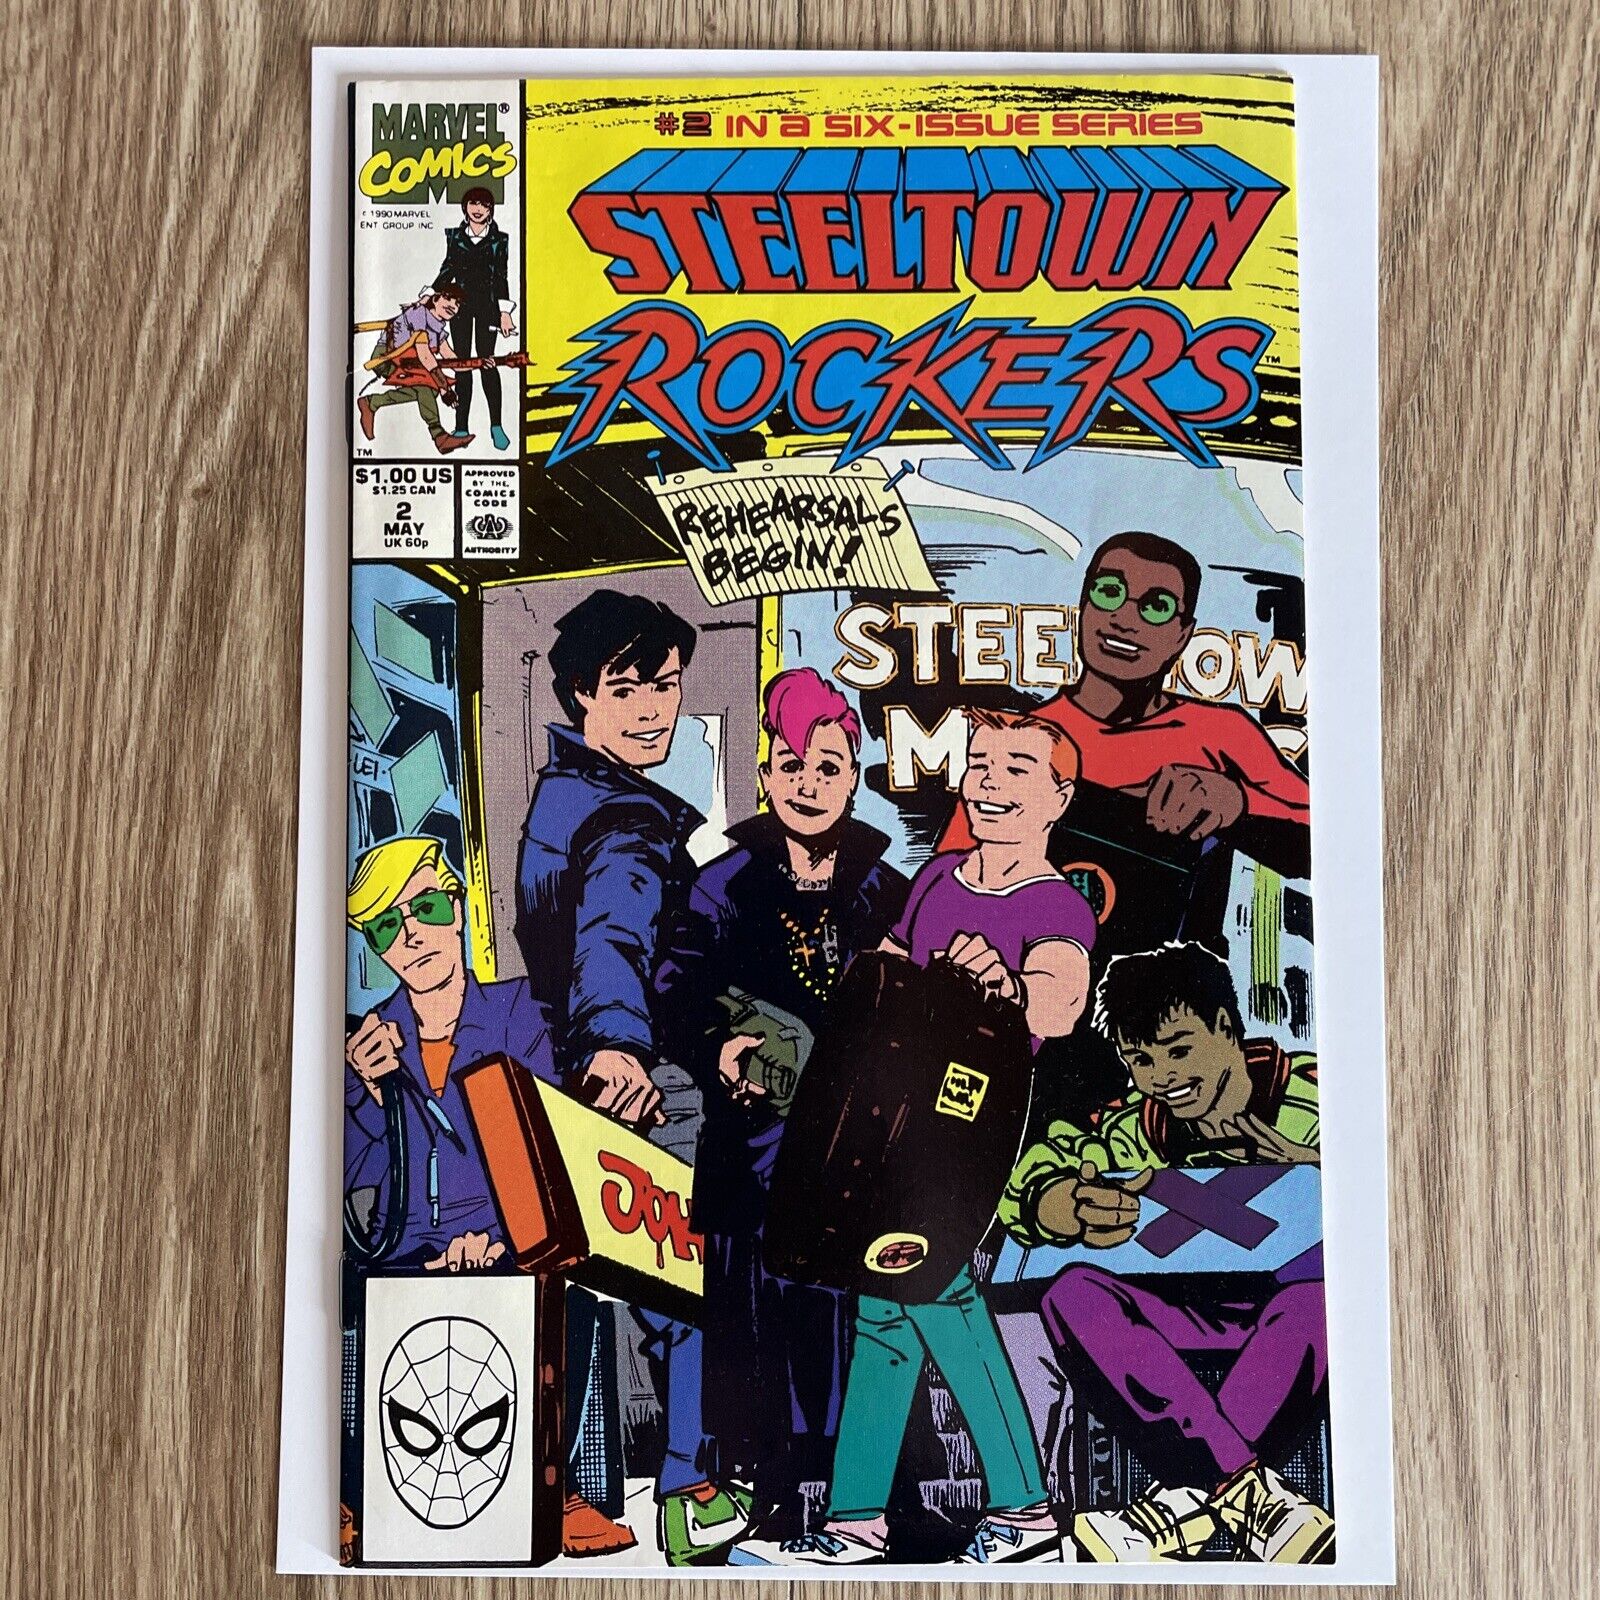 Steeltown Rockers #2 (Marvel Comics May 1990)